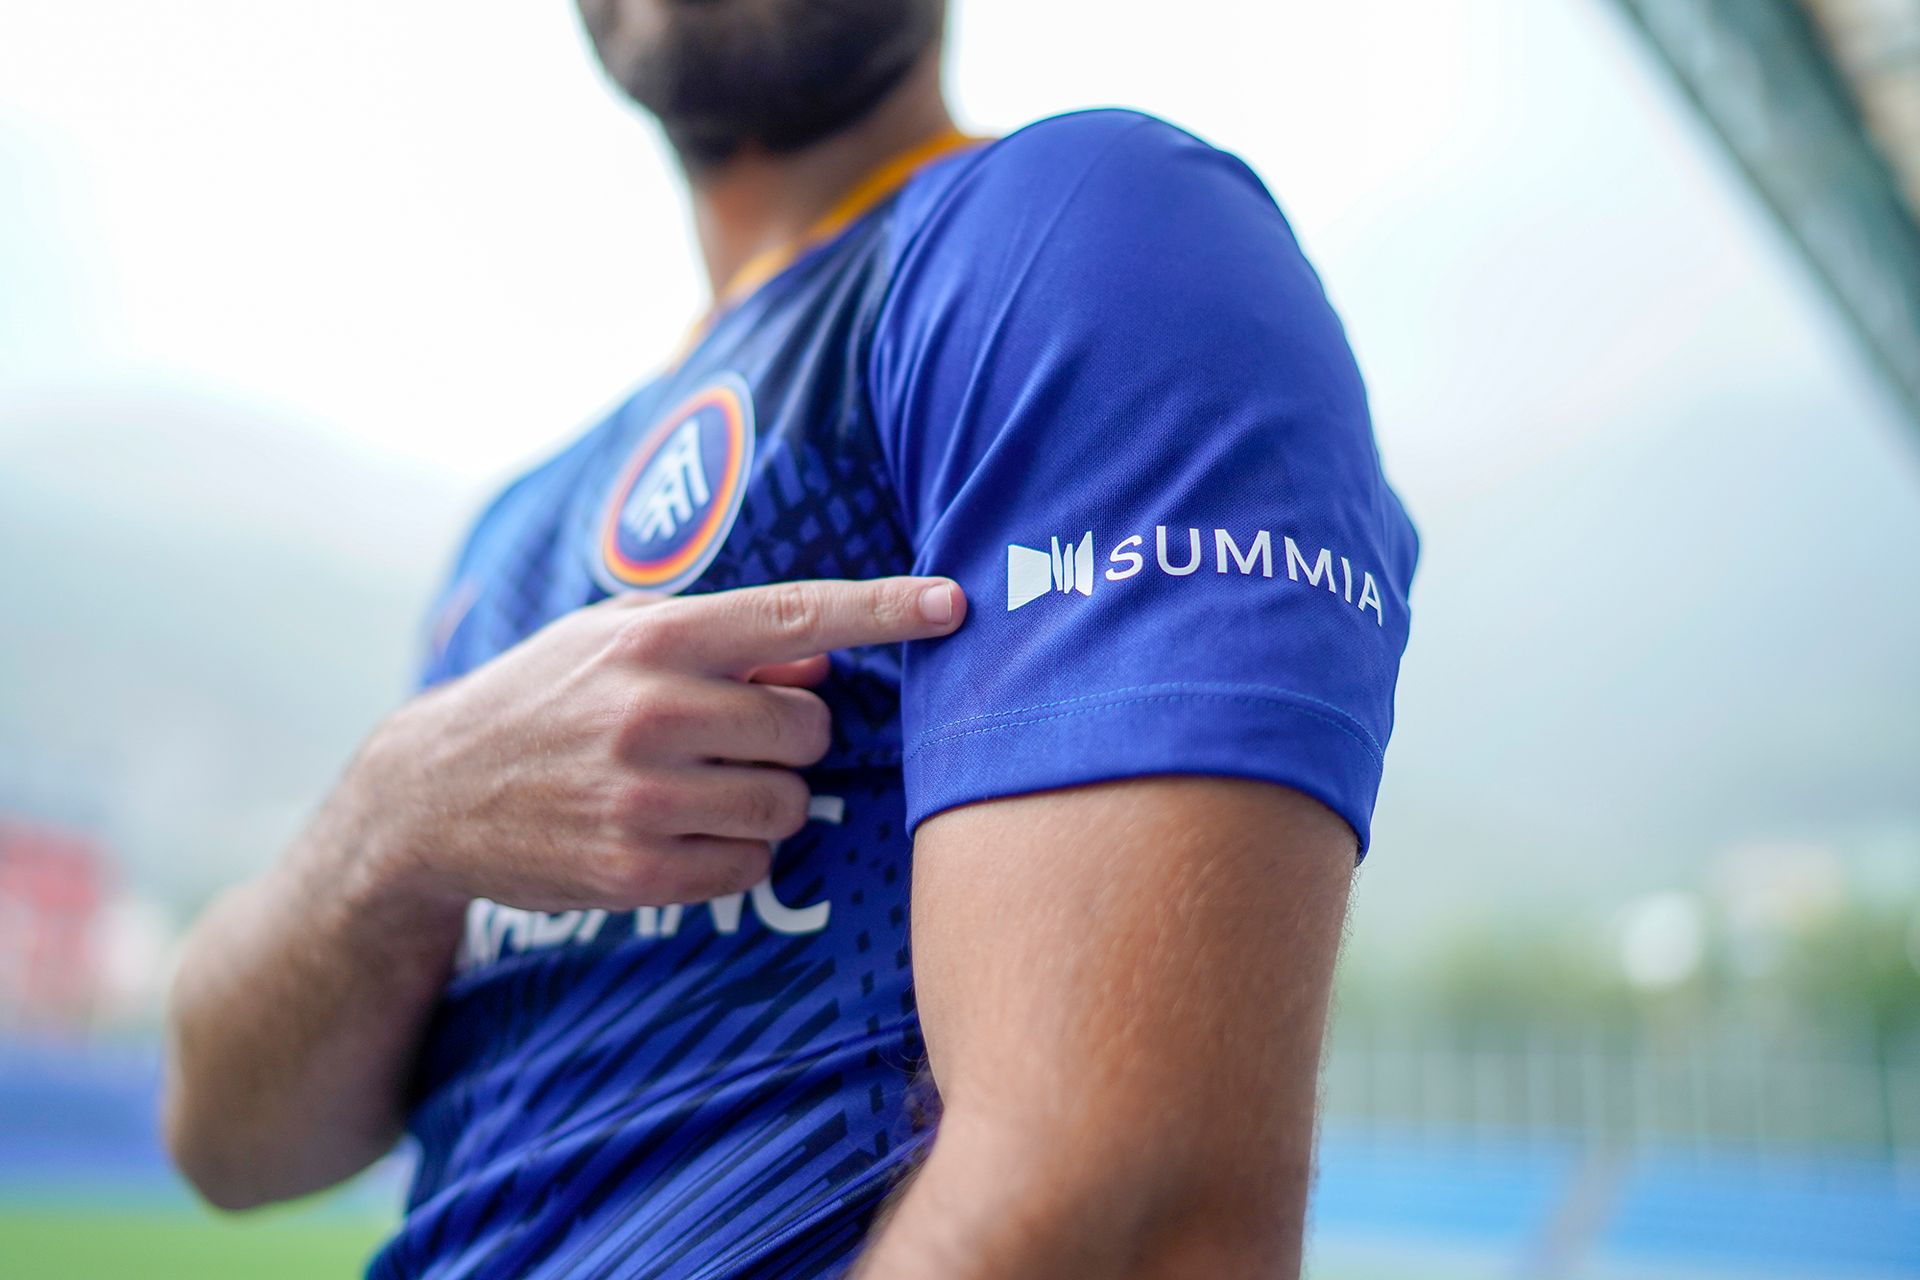 Summia, nuevo patrocinador para la manga de la camiseta